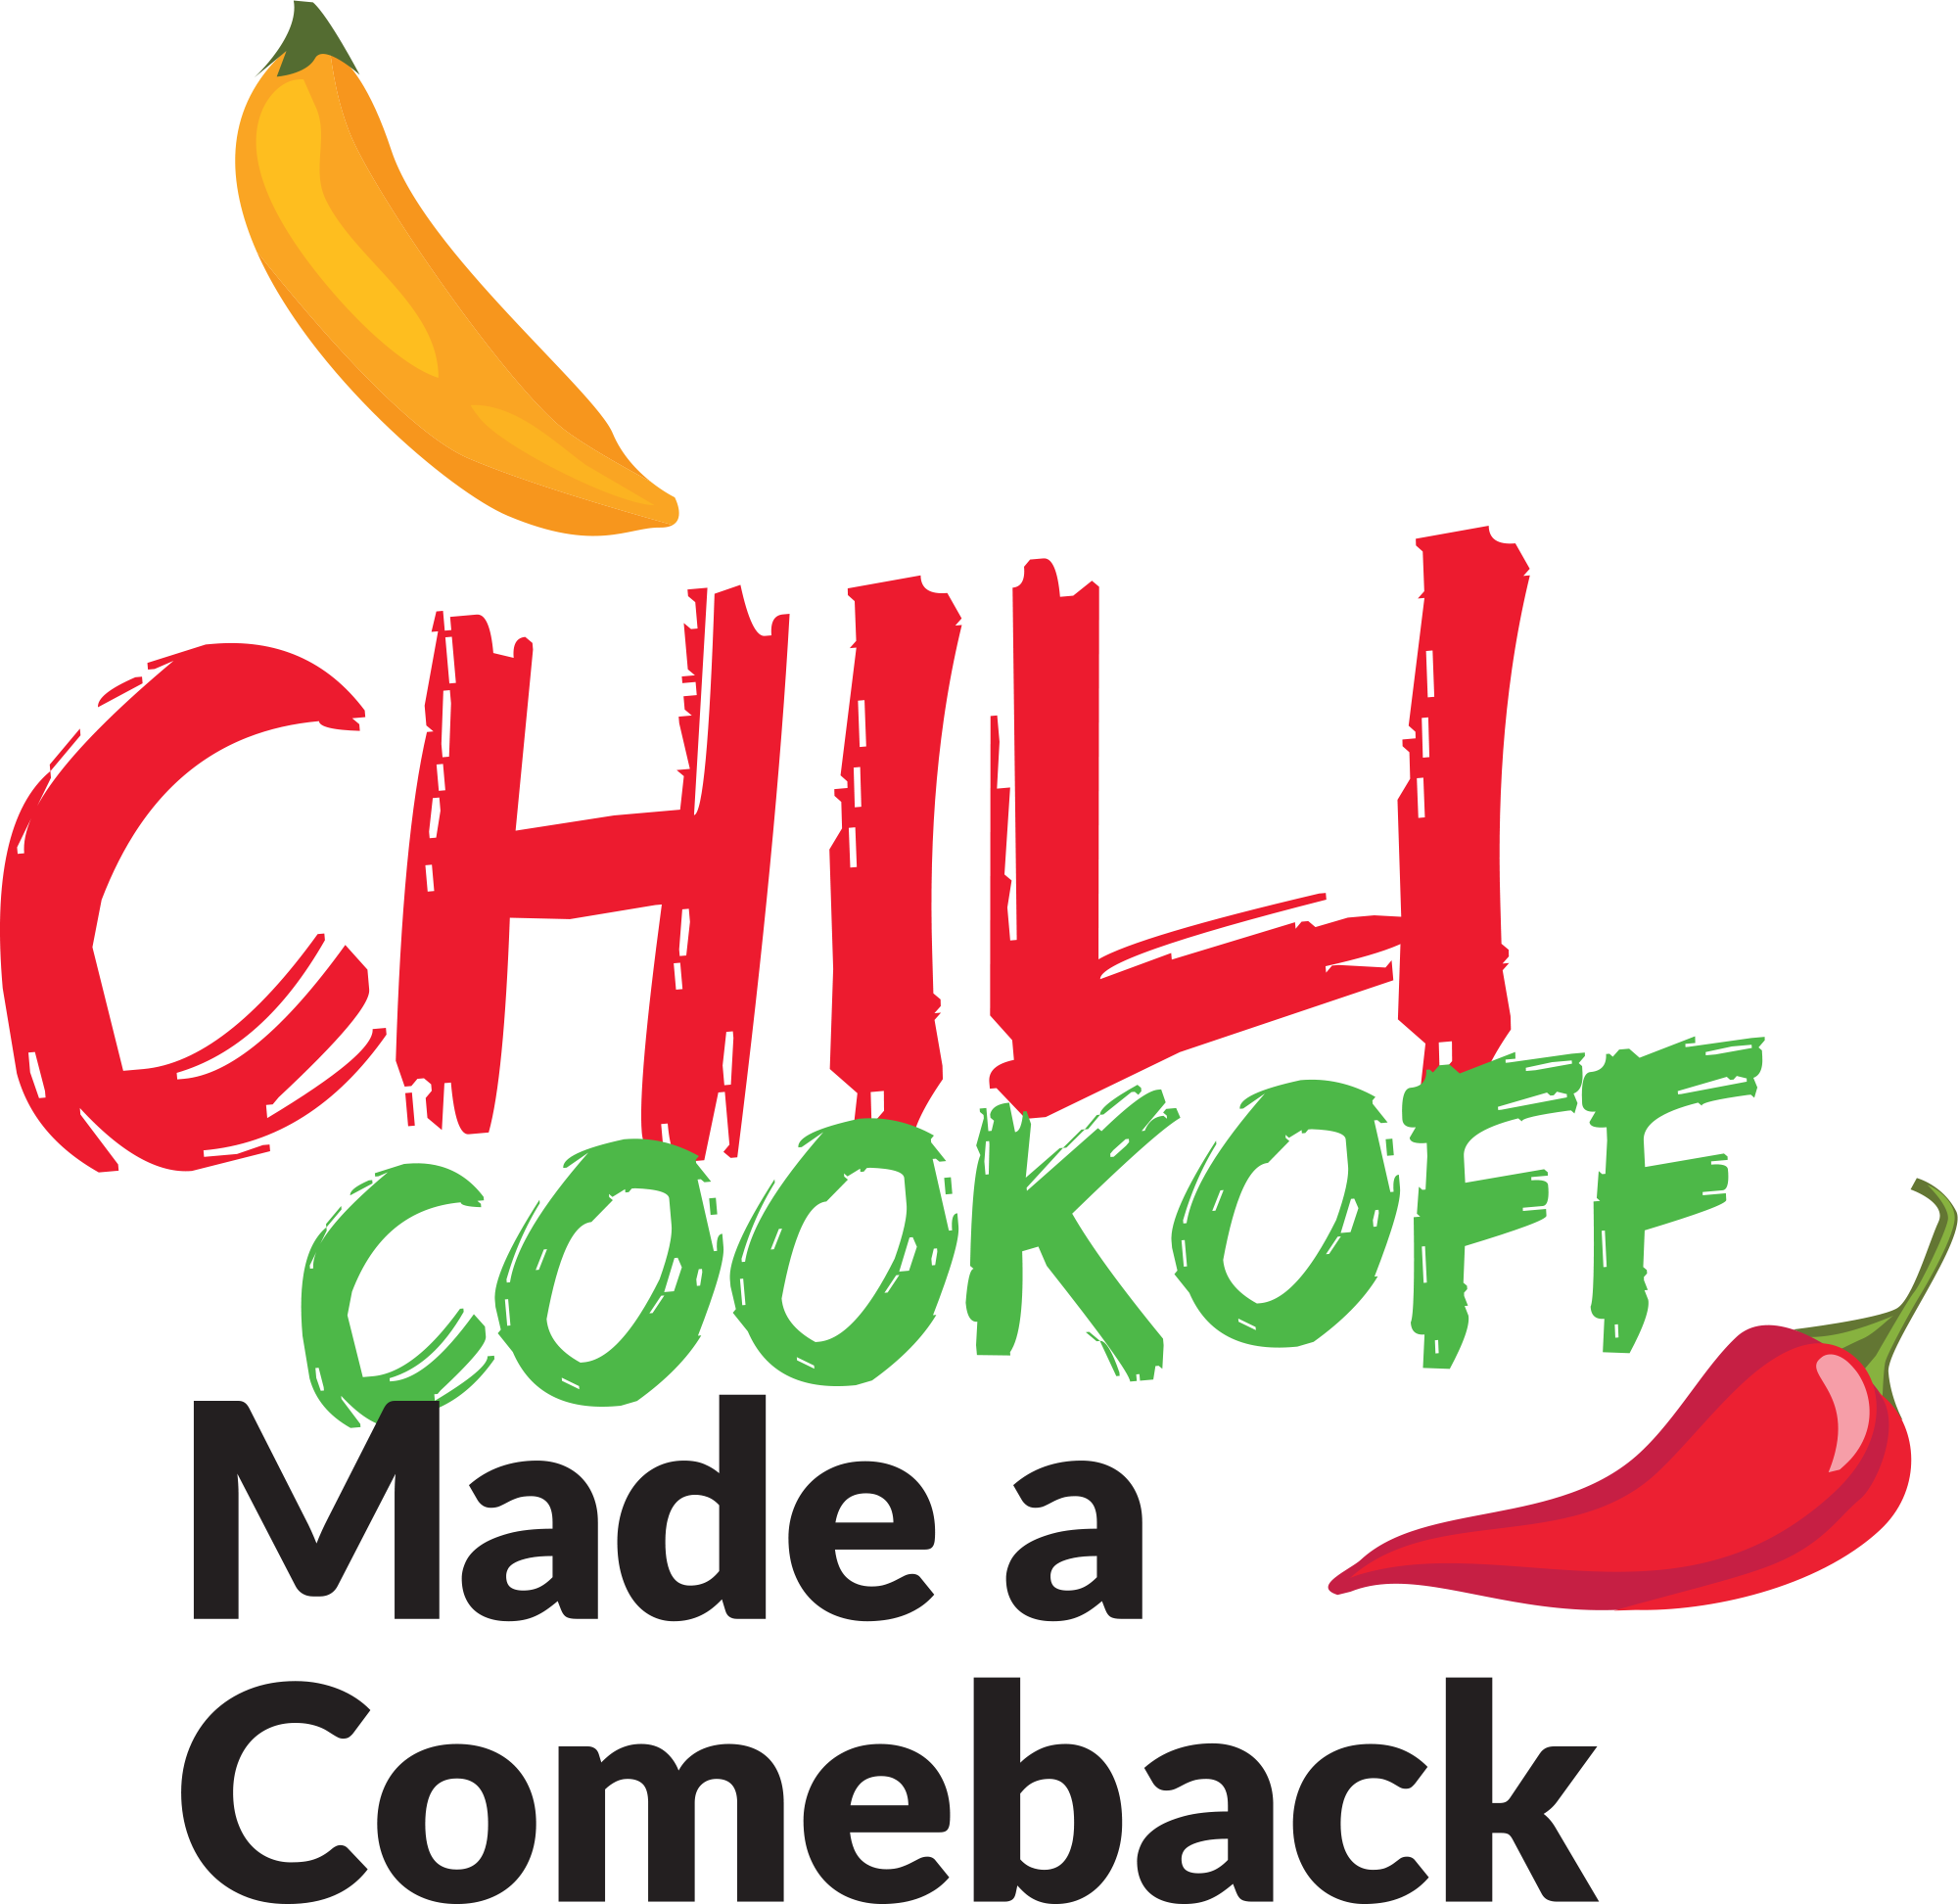 Chili Cookoff Made a Comeback